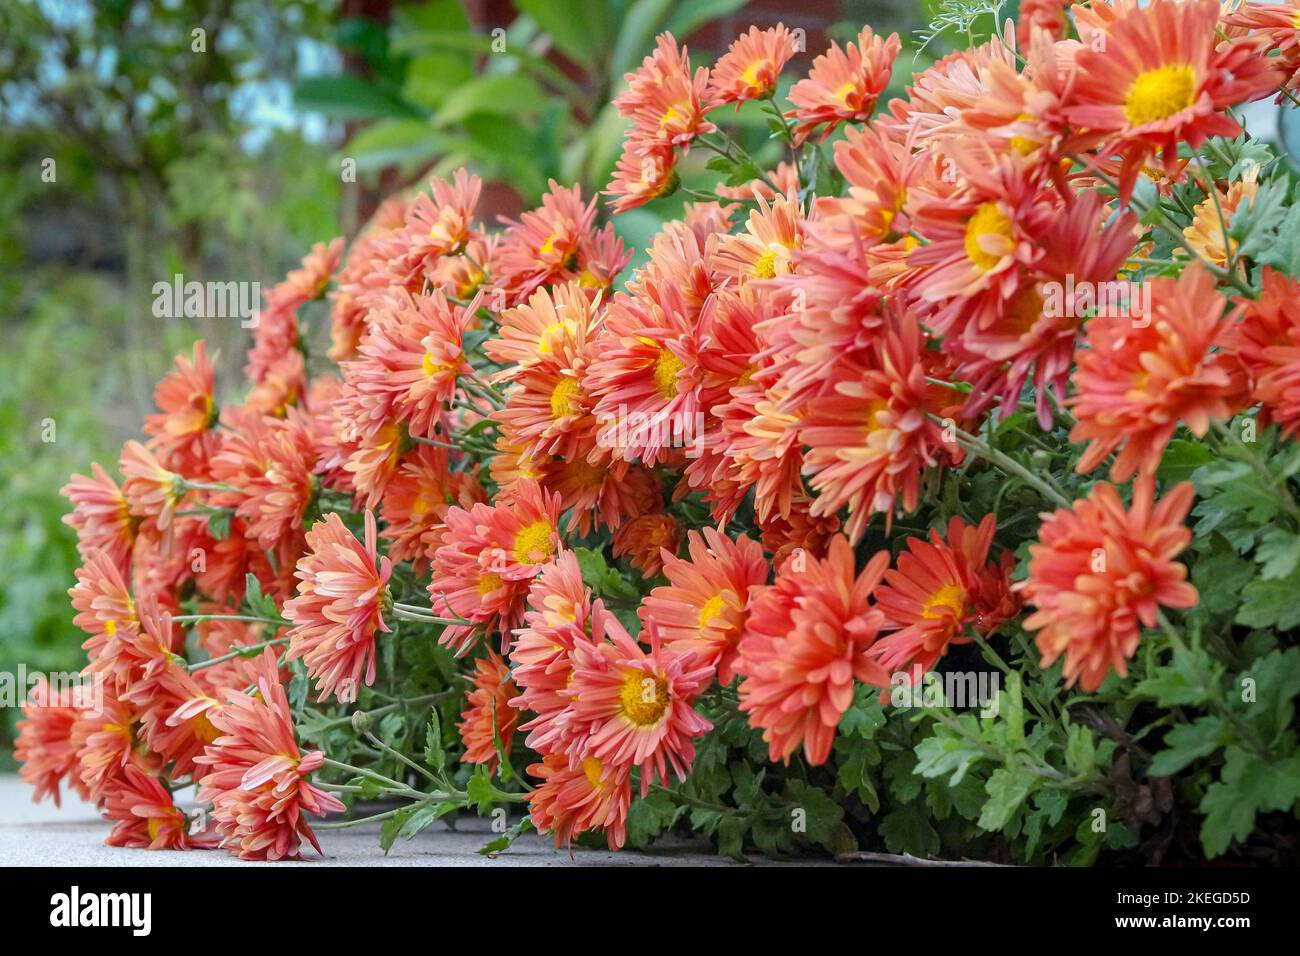 A bush of Korean chrysanthemum (Chrysanthemum hortorum) against blurred background Stock Photo